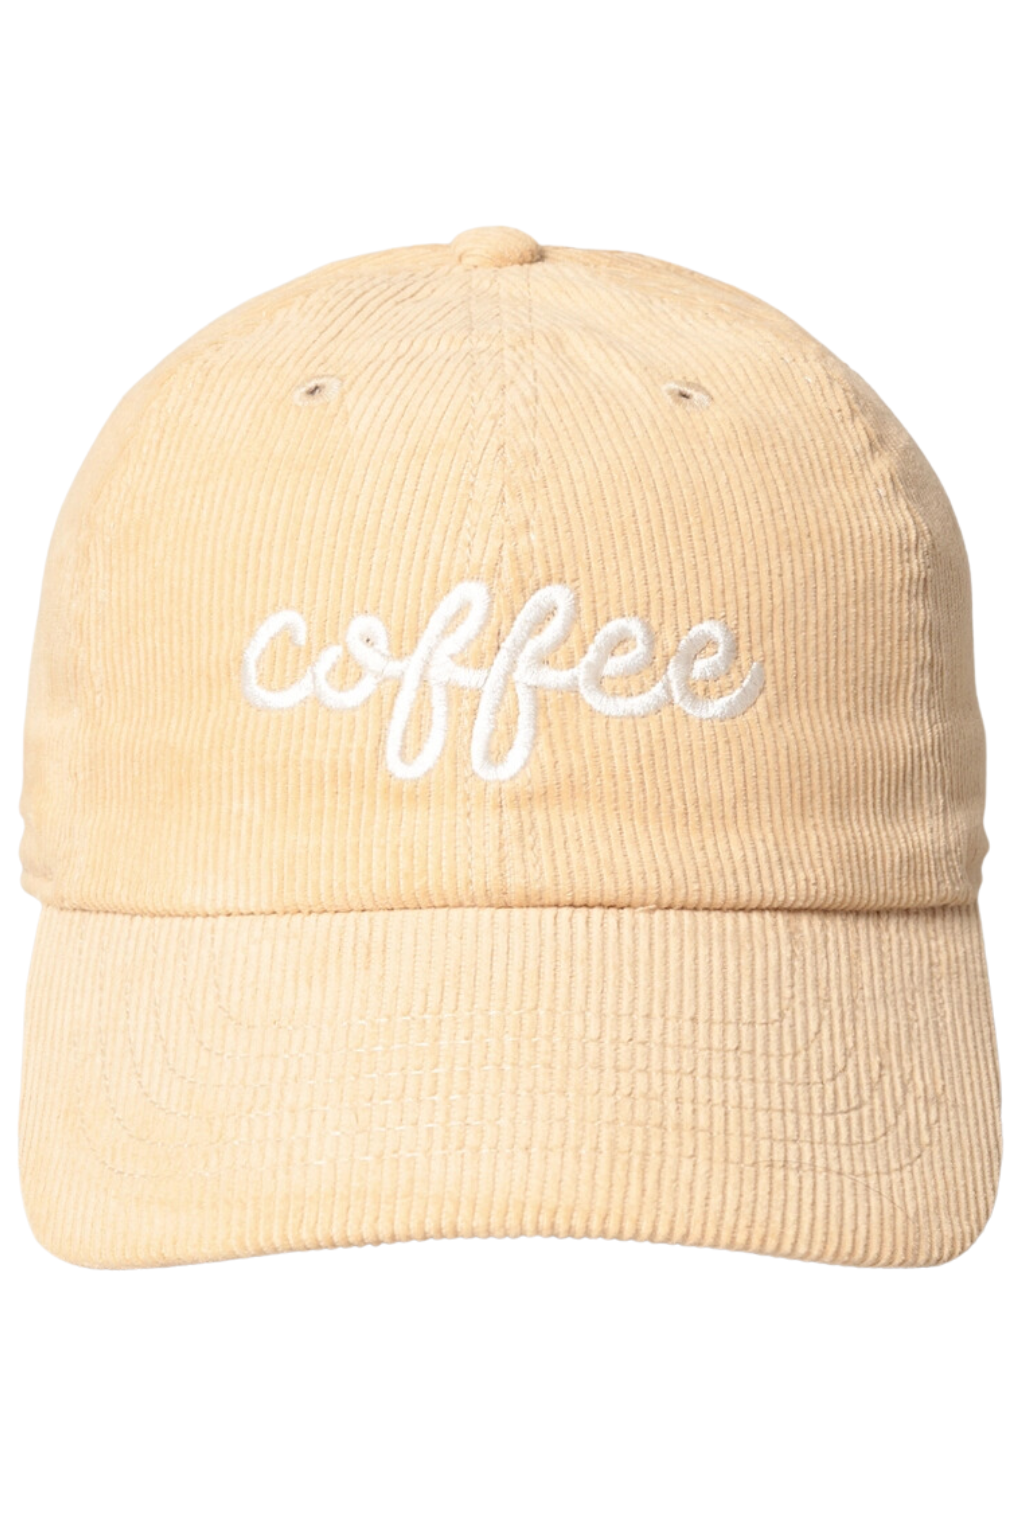 Coffee Ball Cap - Sand